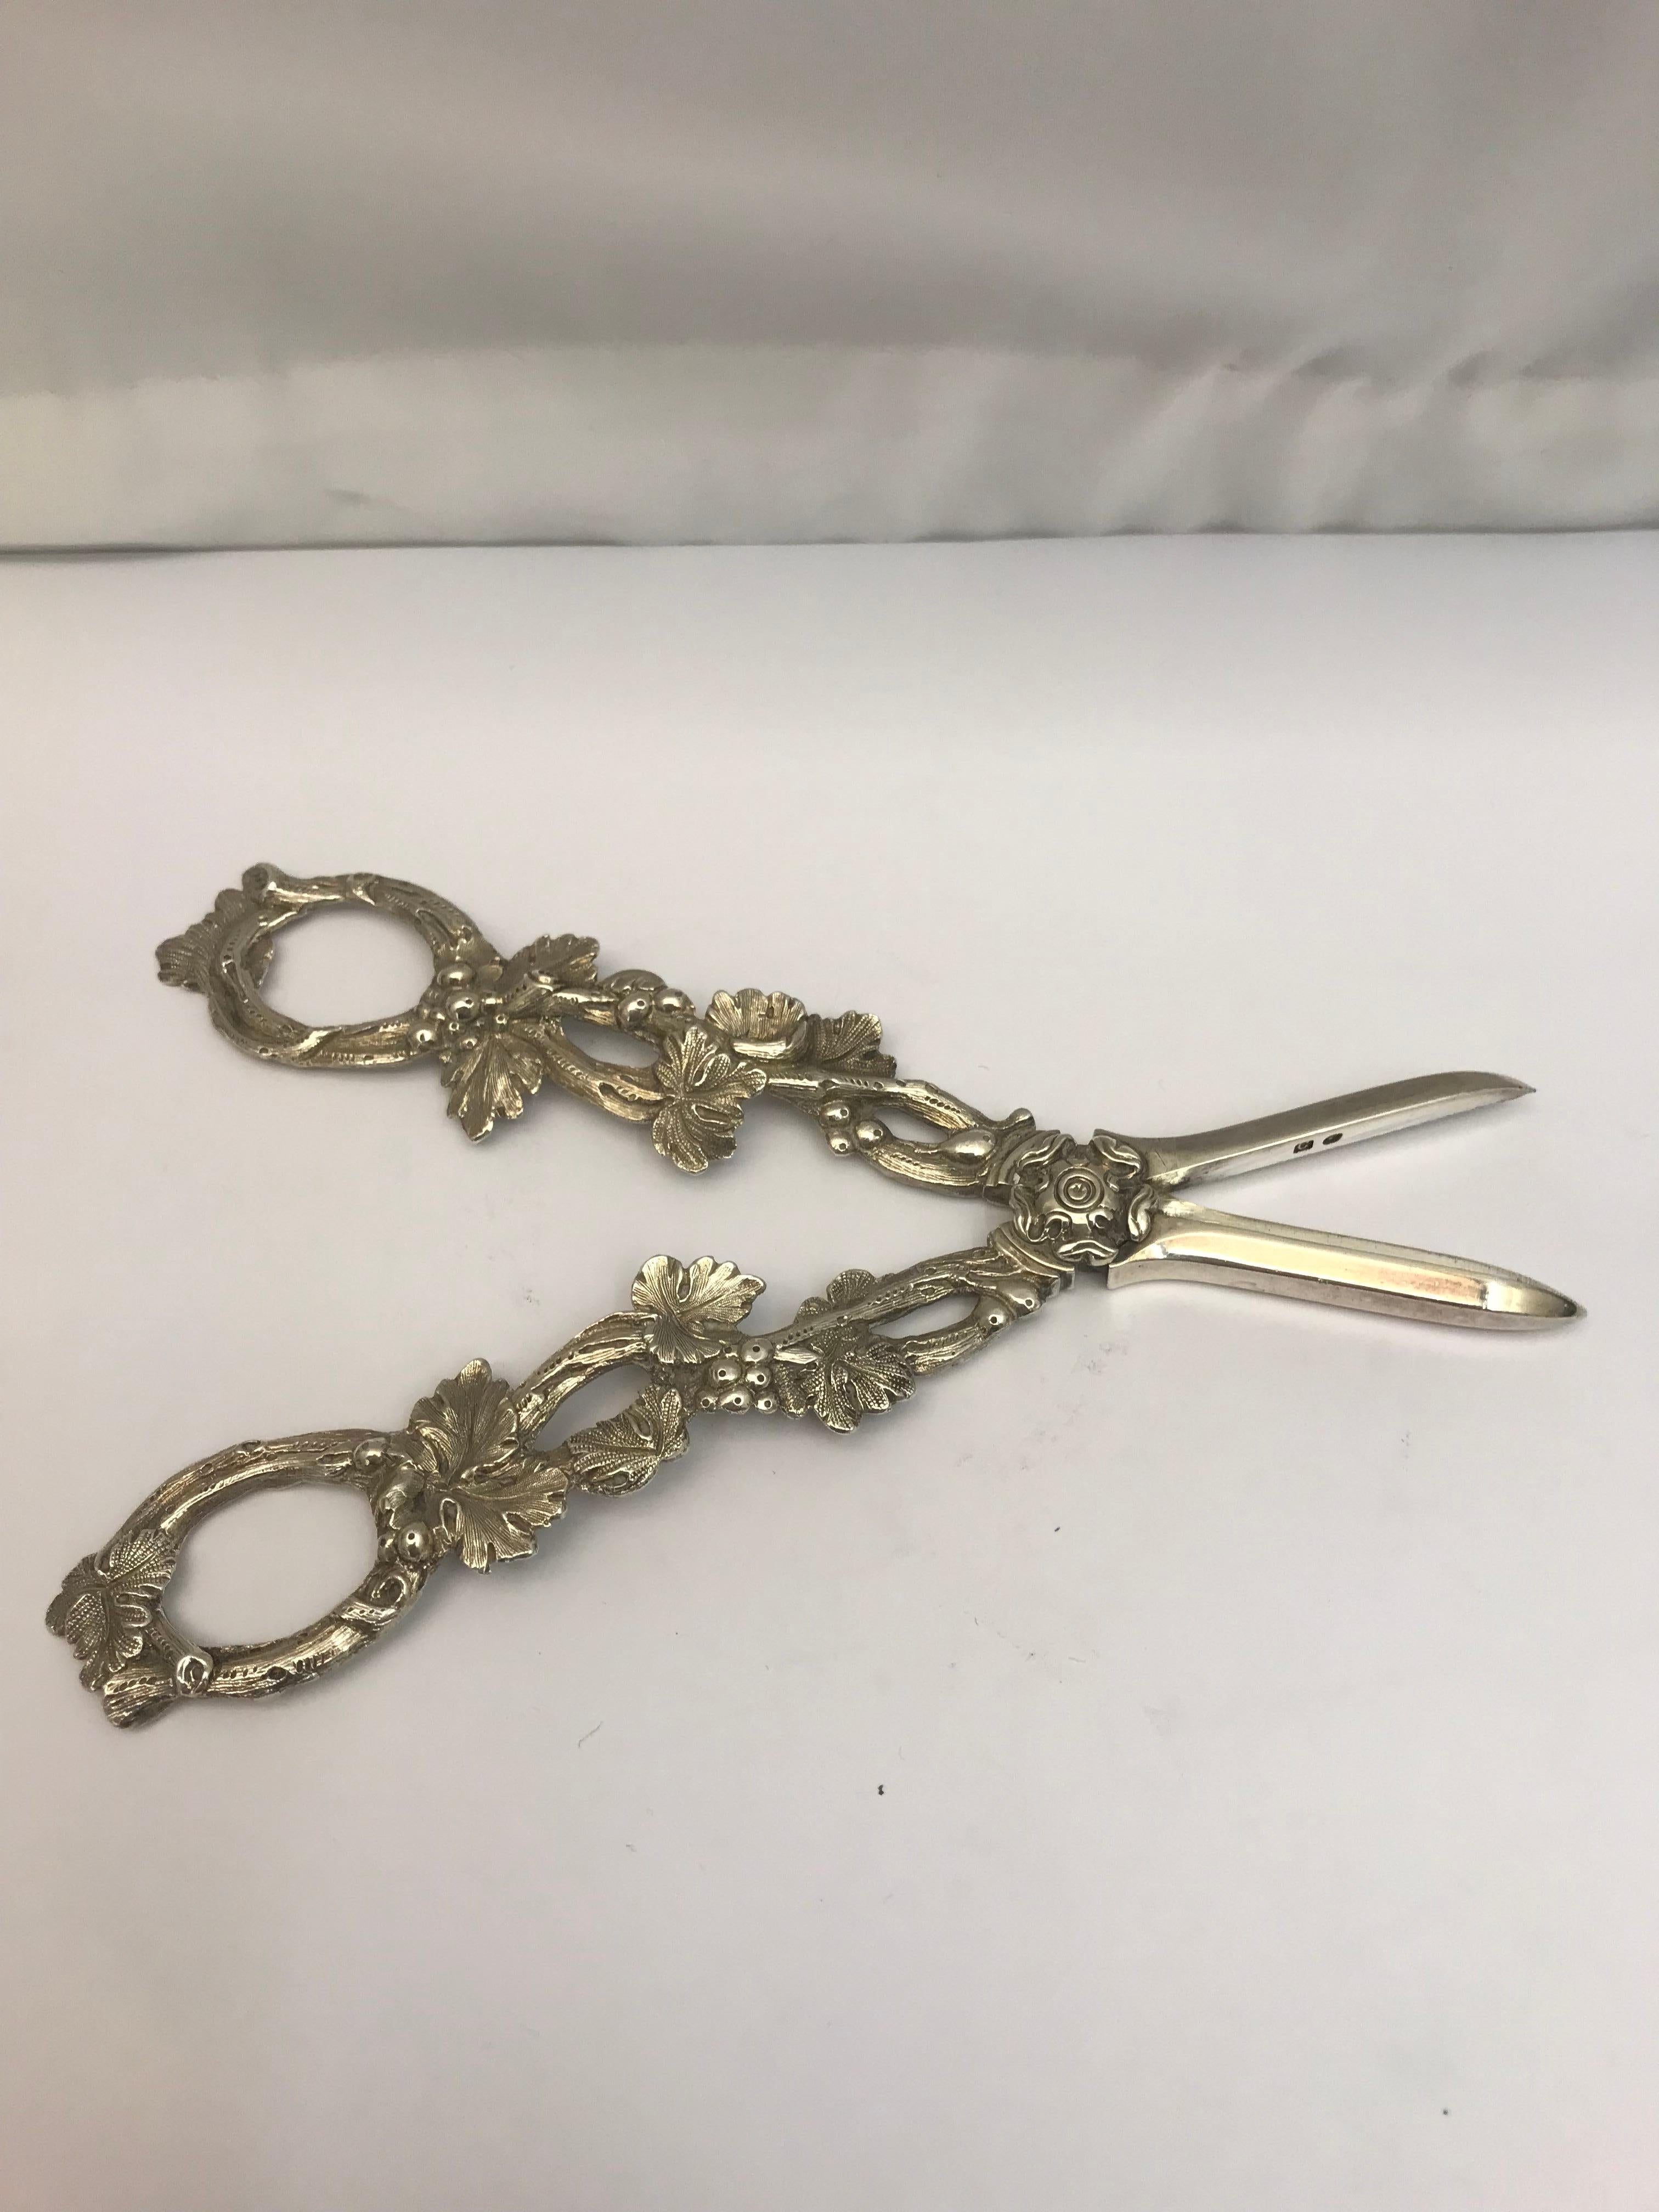 Antique silver grape scissors, made in 1870.
 